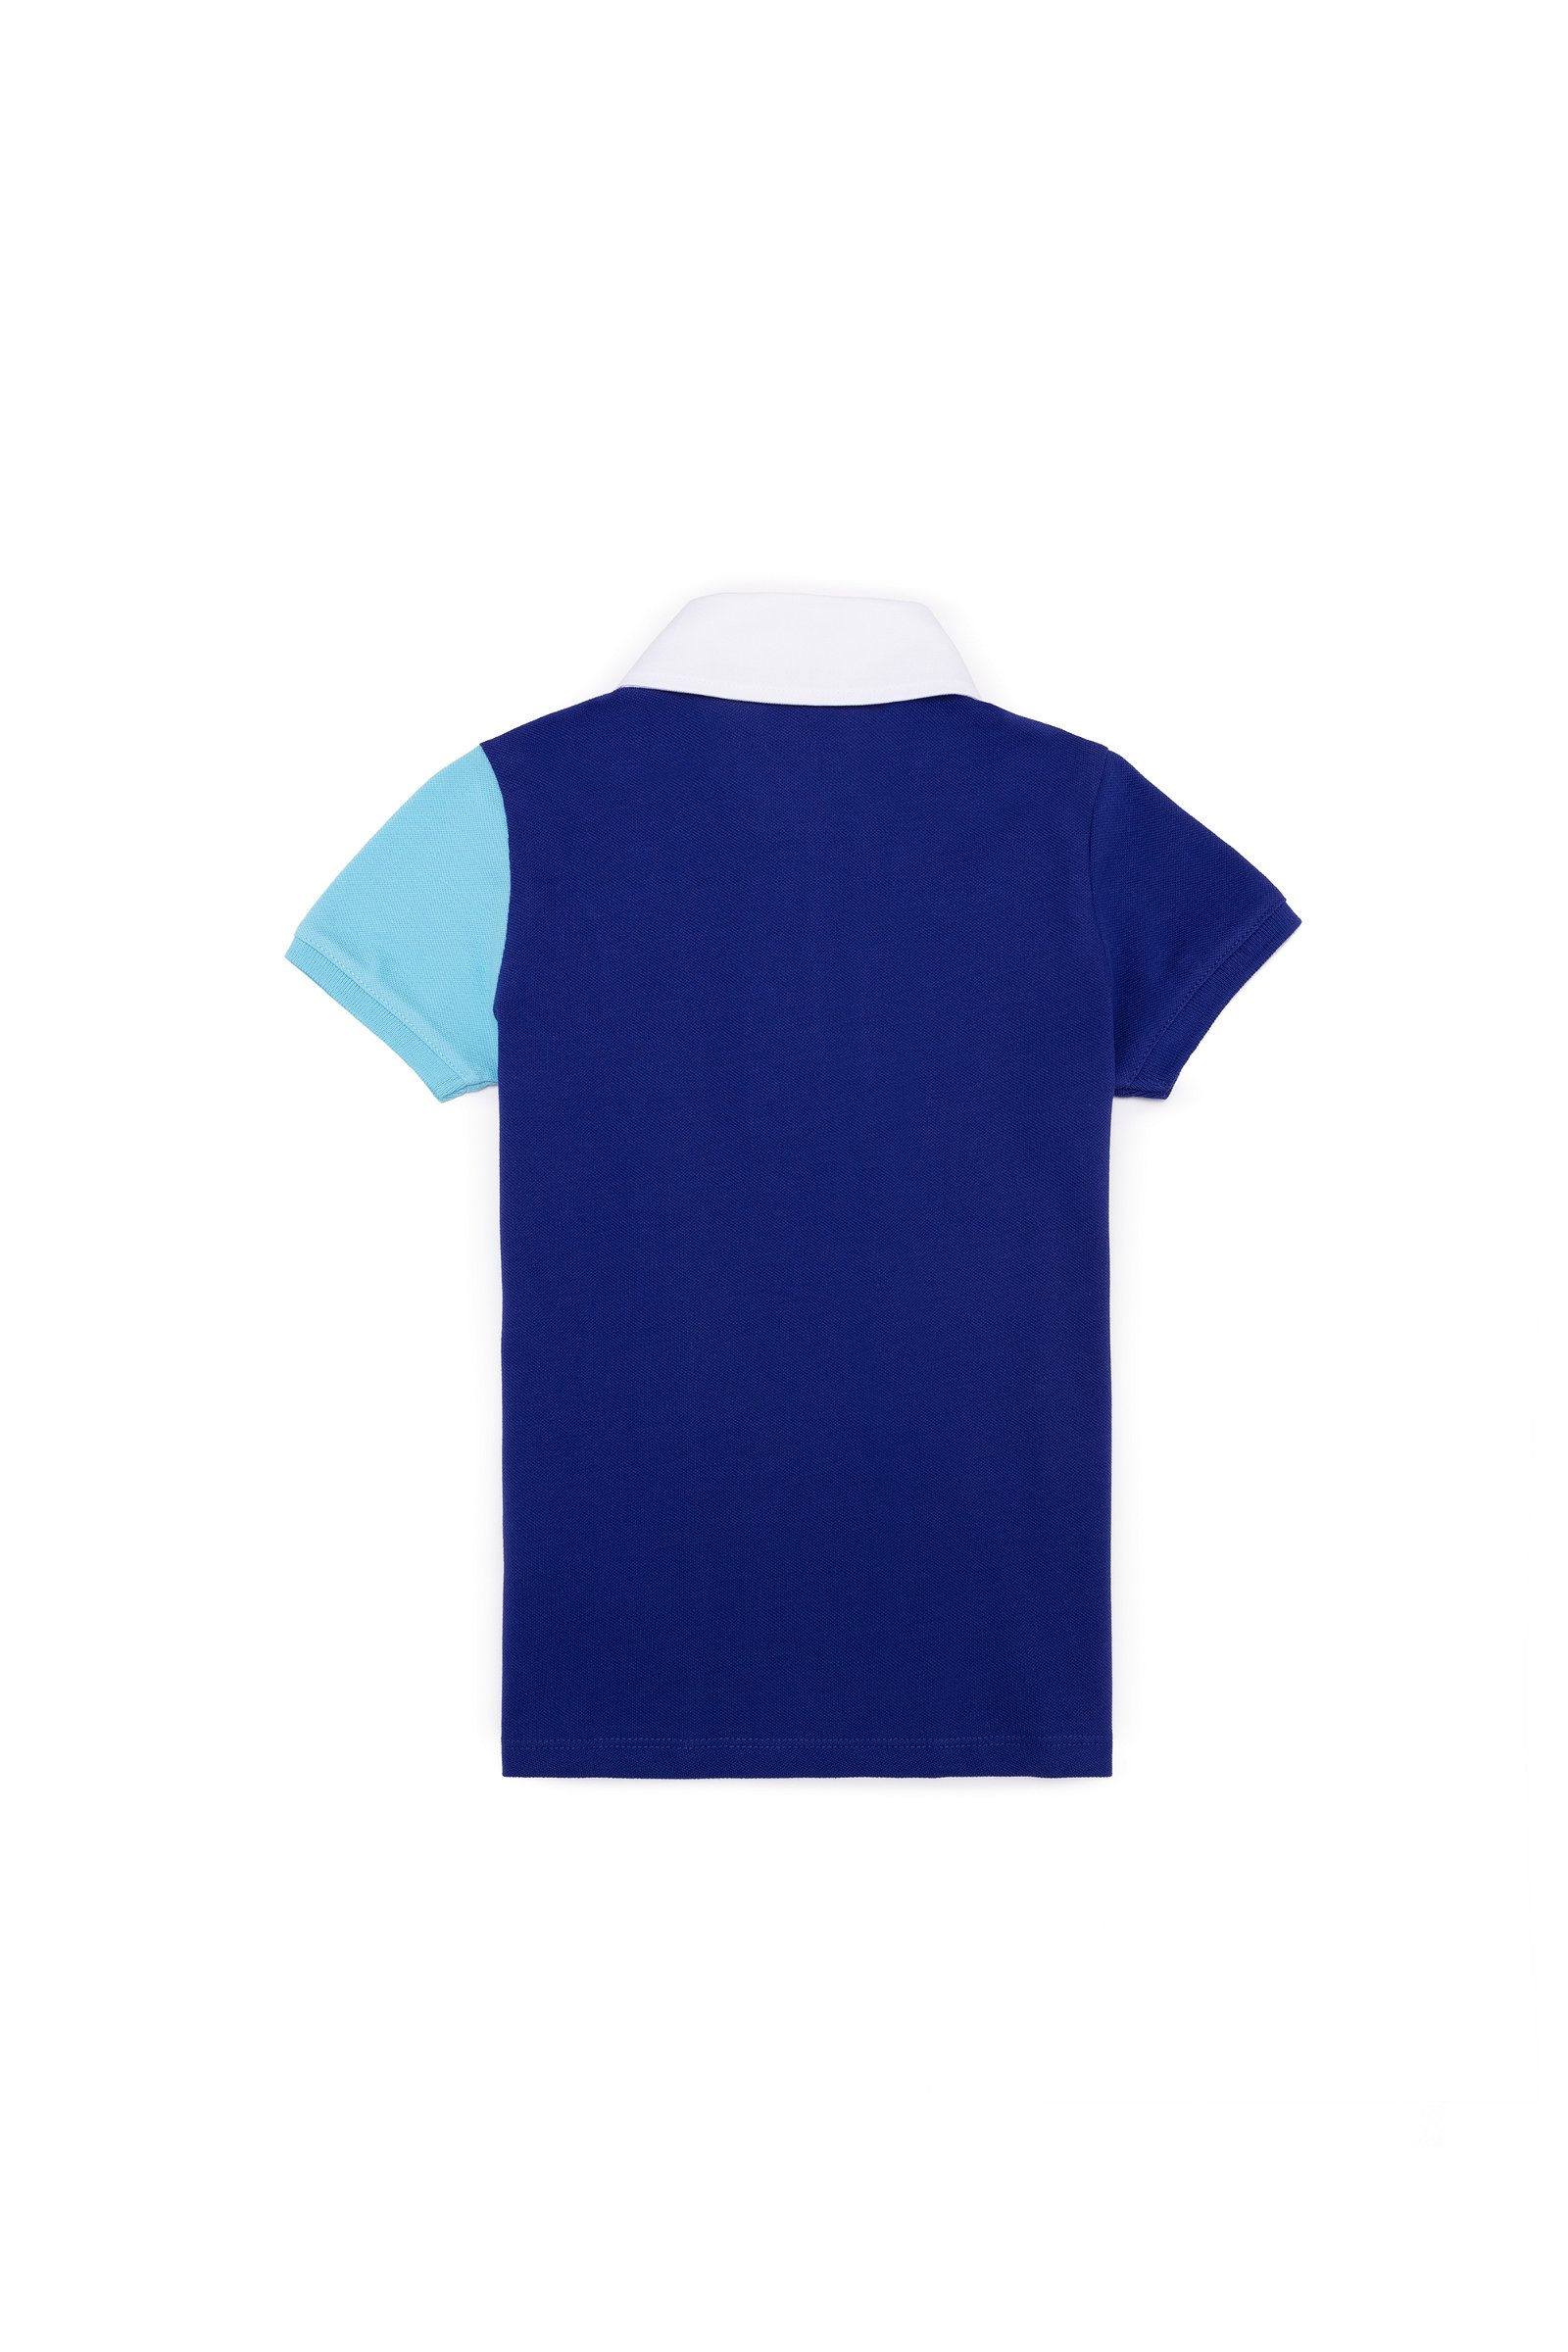 تی شرت یقه پولو آبی  استاندارد فیت آستین کوتاه پسرانه یو اس پولو | US POLO ASSN